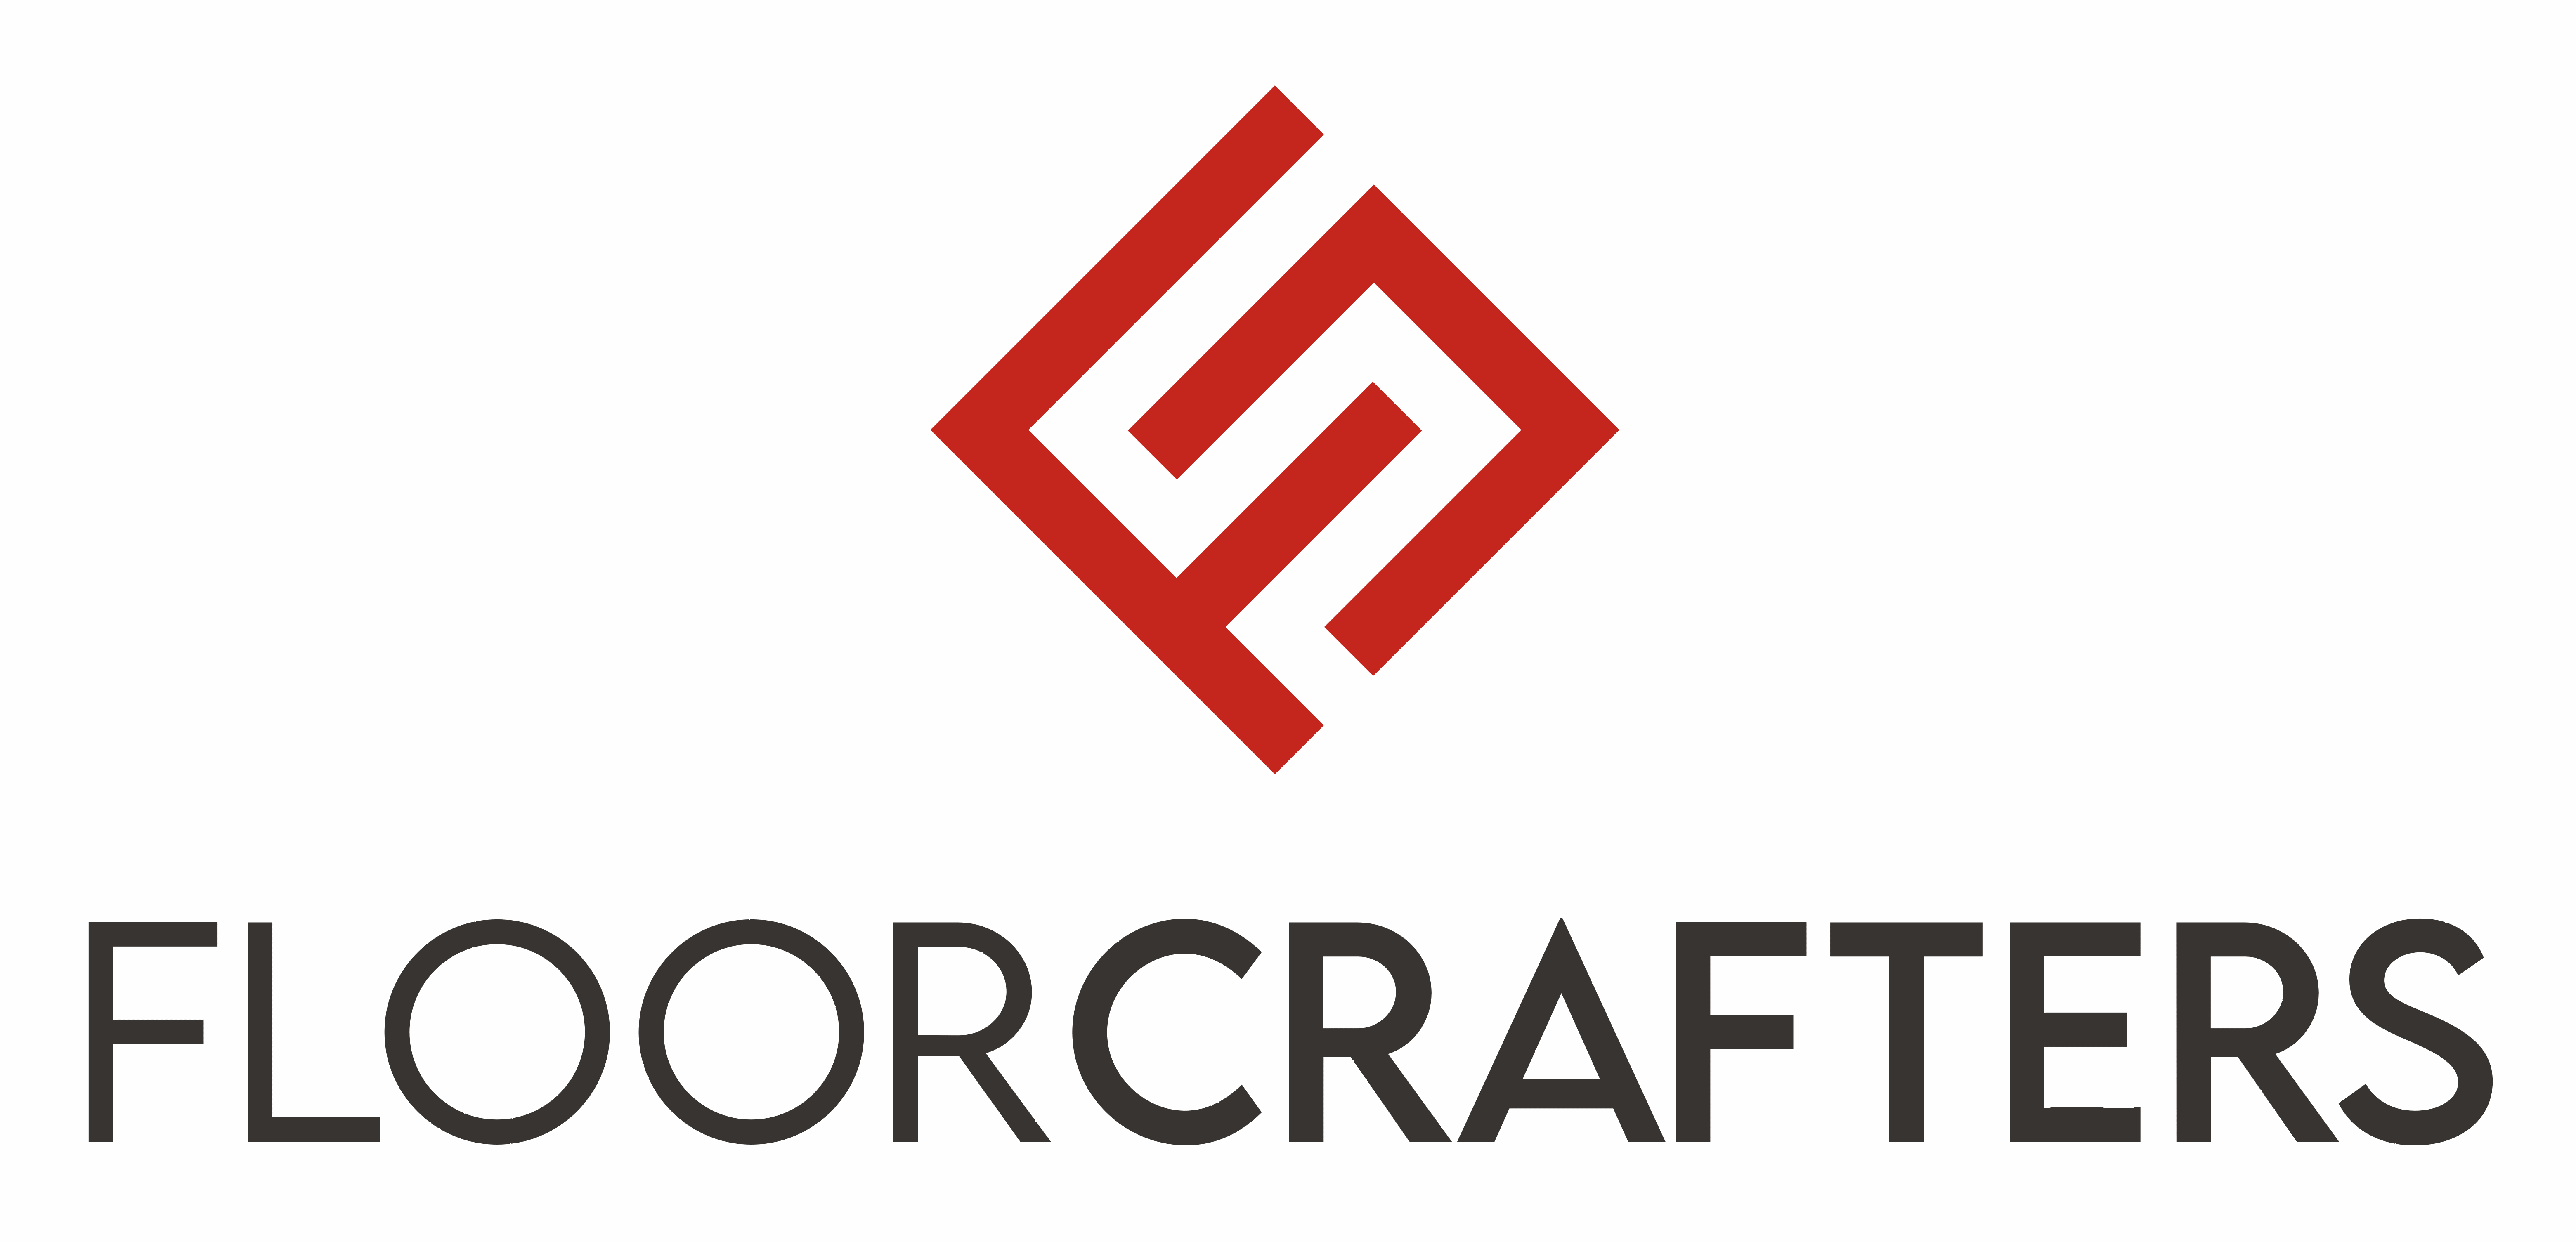 Floorcrafters logo3